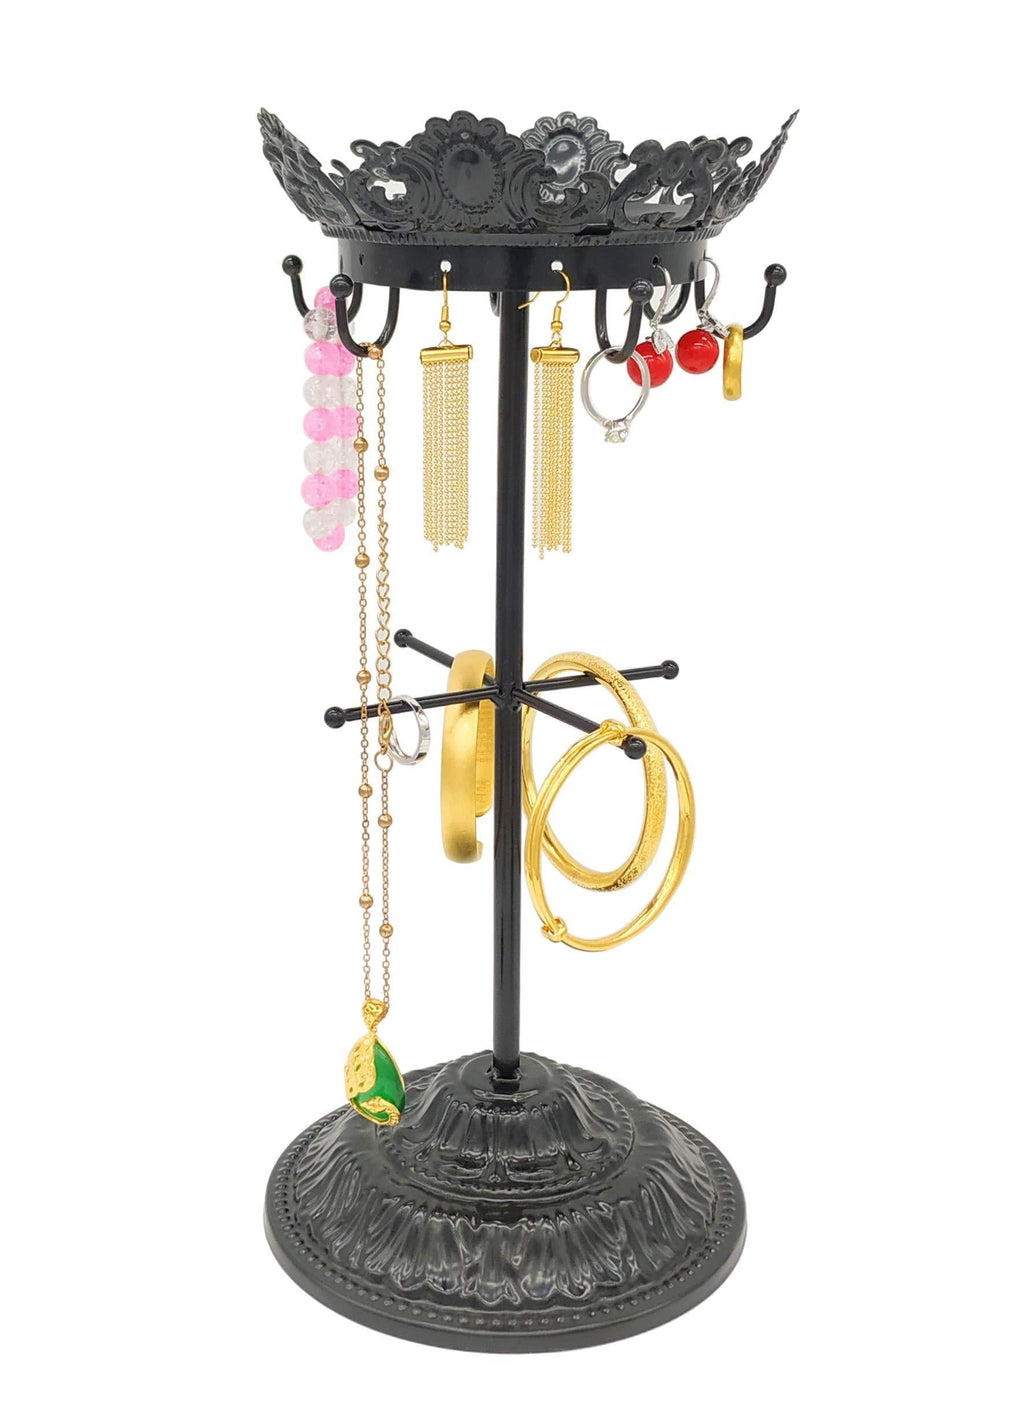 [Australia] - Owlgift Metal Crown Shaped Jewelry Tower Necklace Organizer Earrings Hanger Bracelet Display Tree Stand – Black Shiny Black 